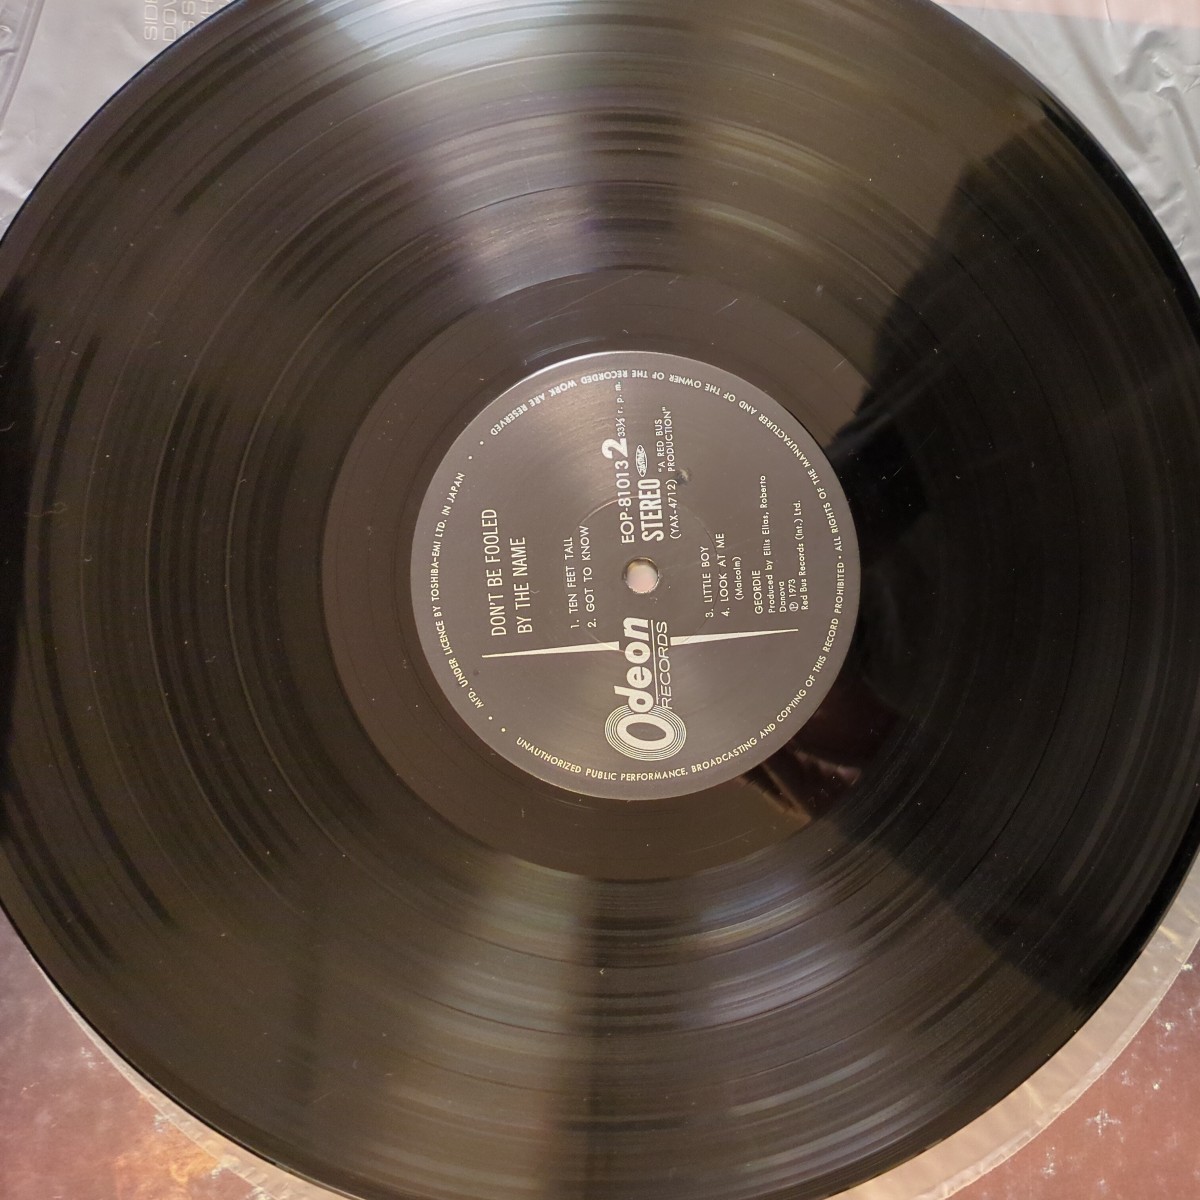 geoedie 2 ジョーディー AC/DC analog record レコード LP アナログ vinyl_画像7